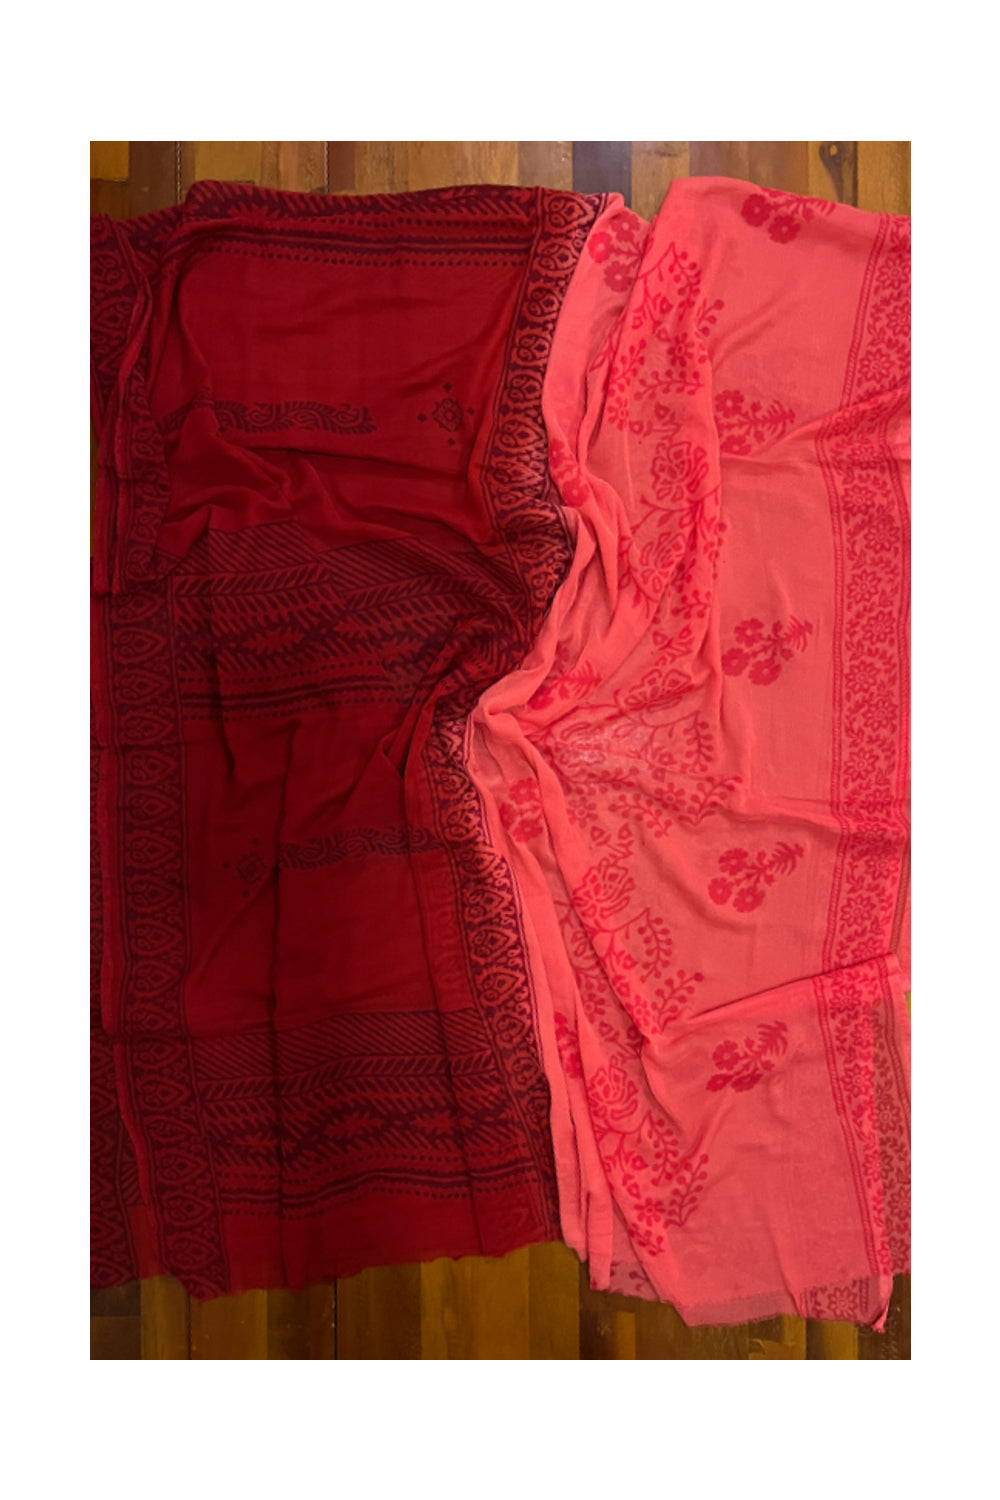 Southloom™ Crepe Churidar Salwar Suit Material in Dark Peach with Floral Prints